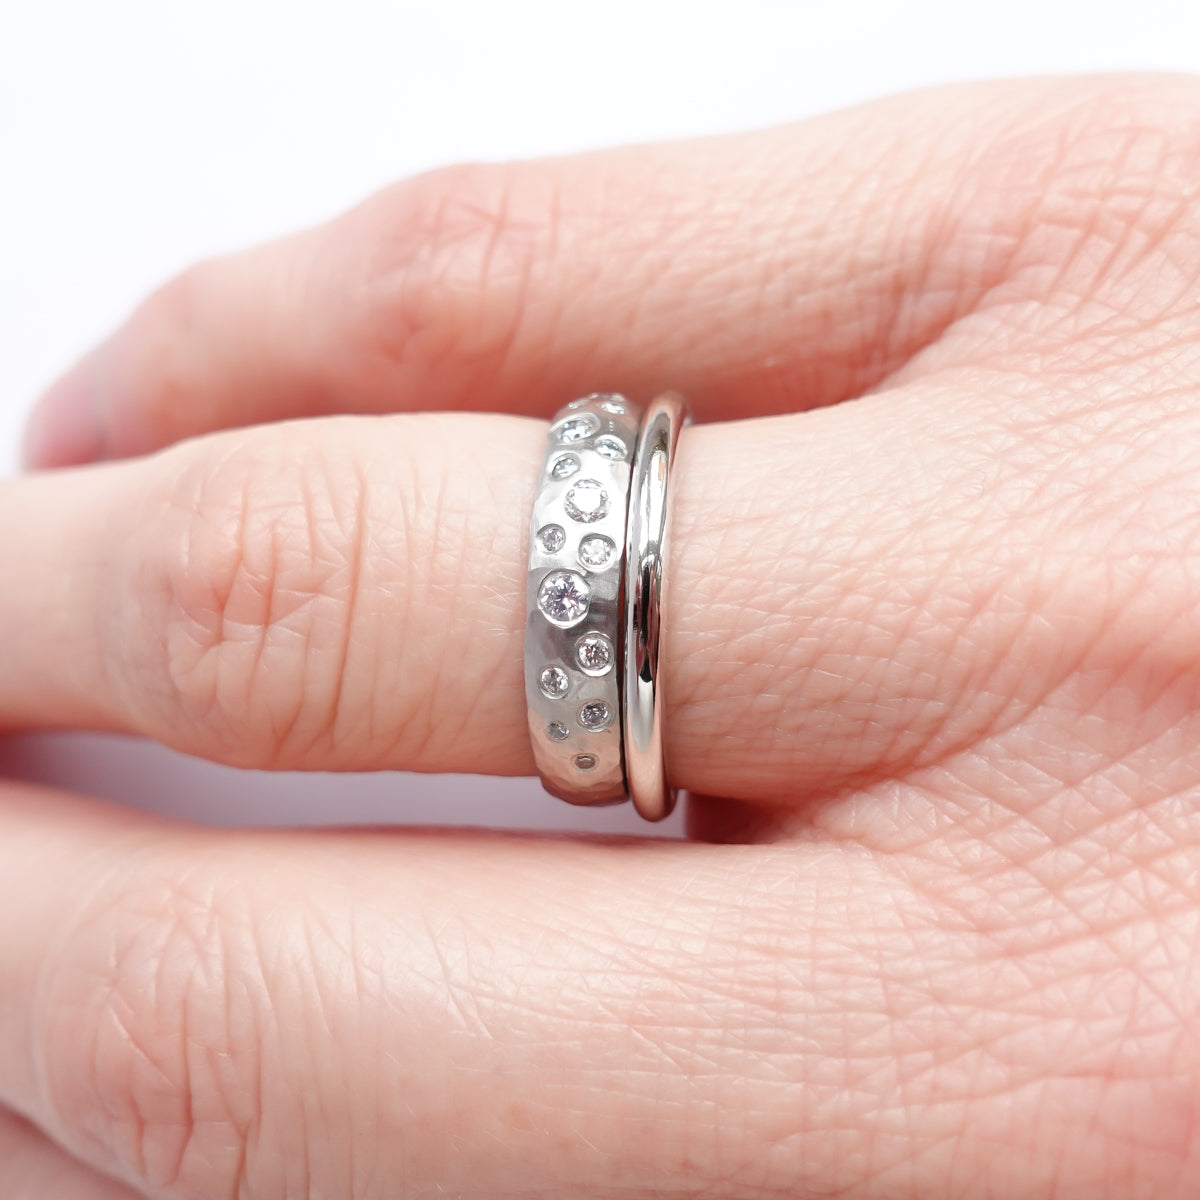 Hammered platinum and diamond ring - unique, handmade and bespoke.